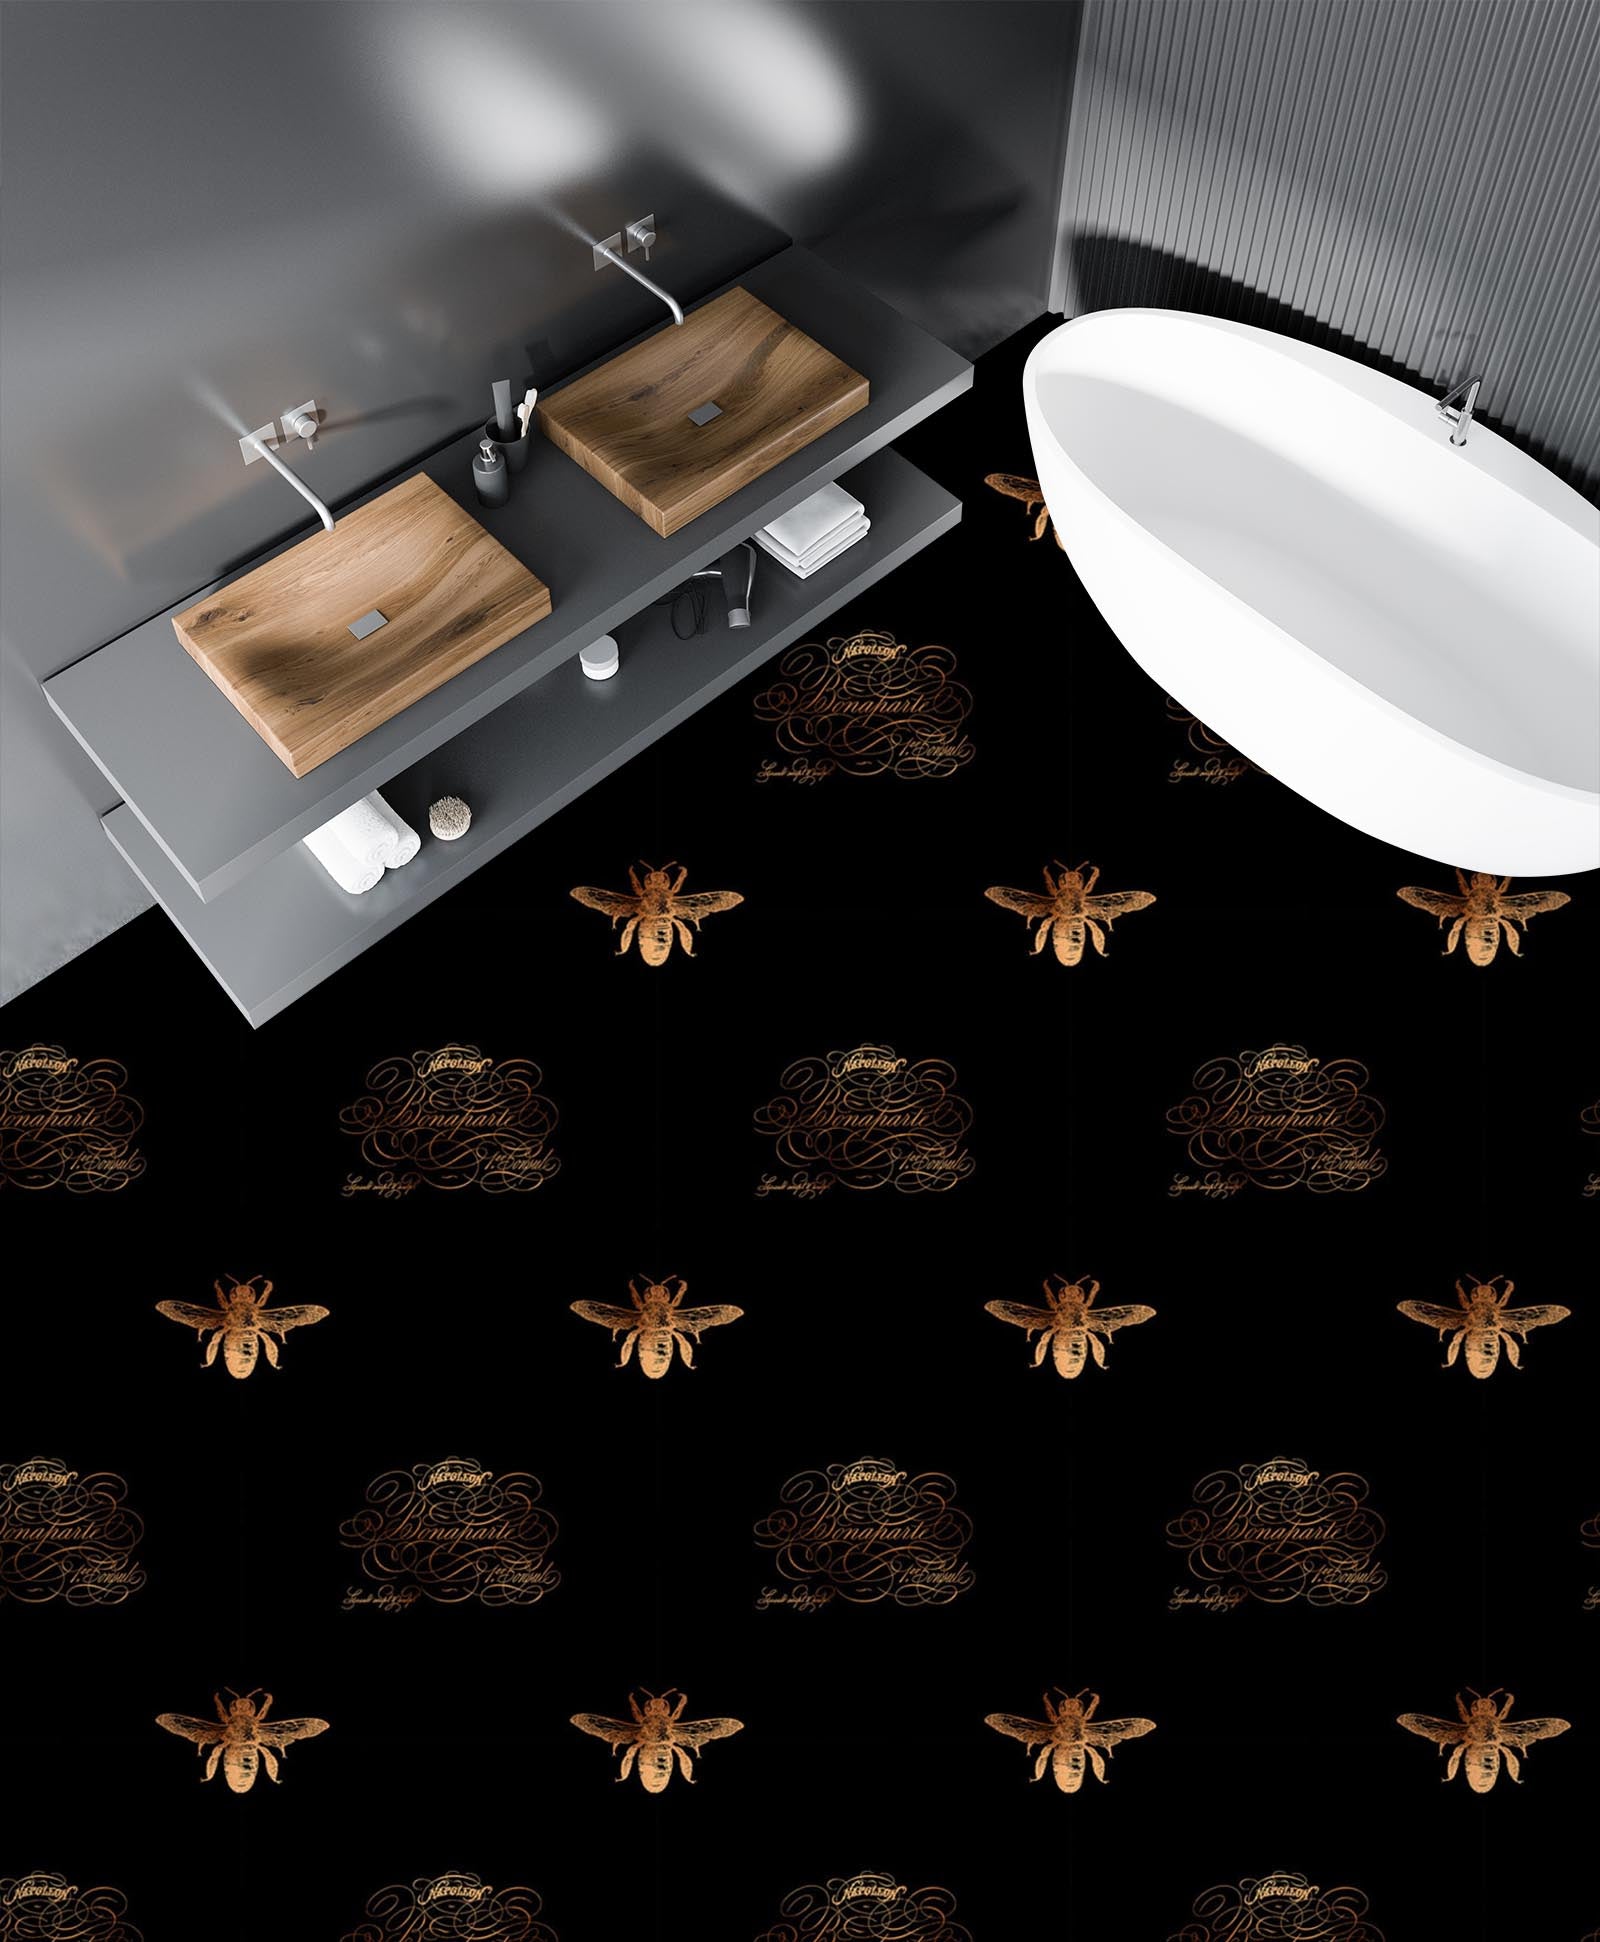 3D Insect Pattern 10024 Uta Naumann Floor Mural  Wallpaper Murals Self-Adhesive Removable Print Epoxy